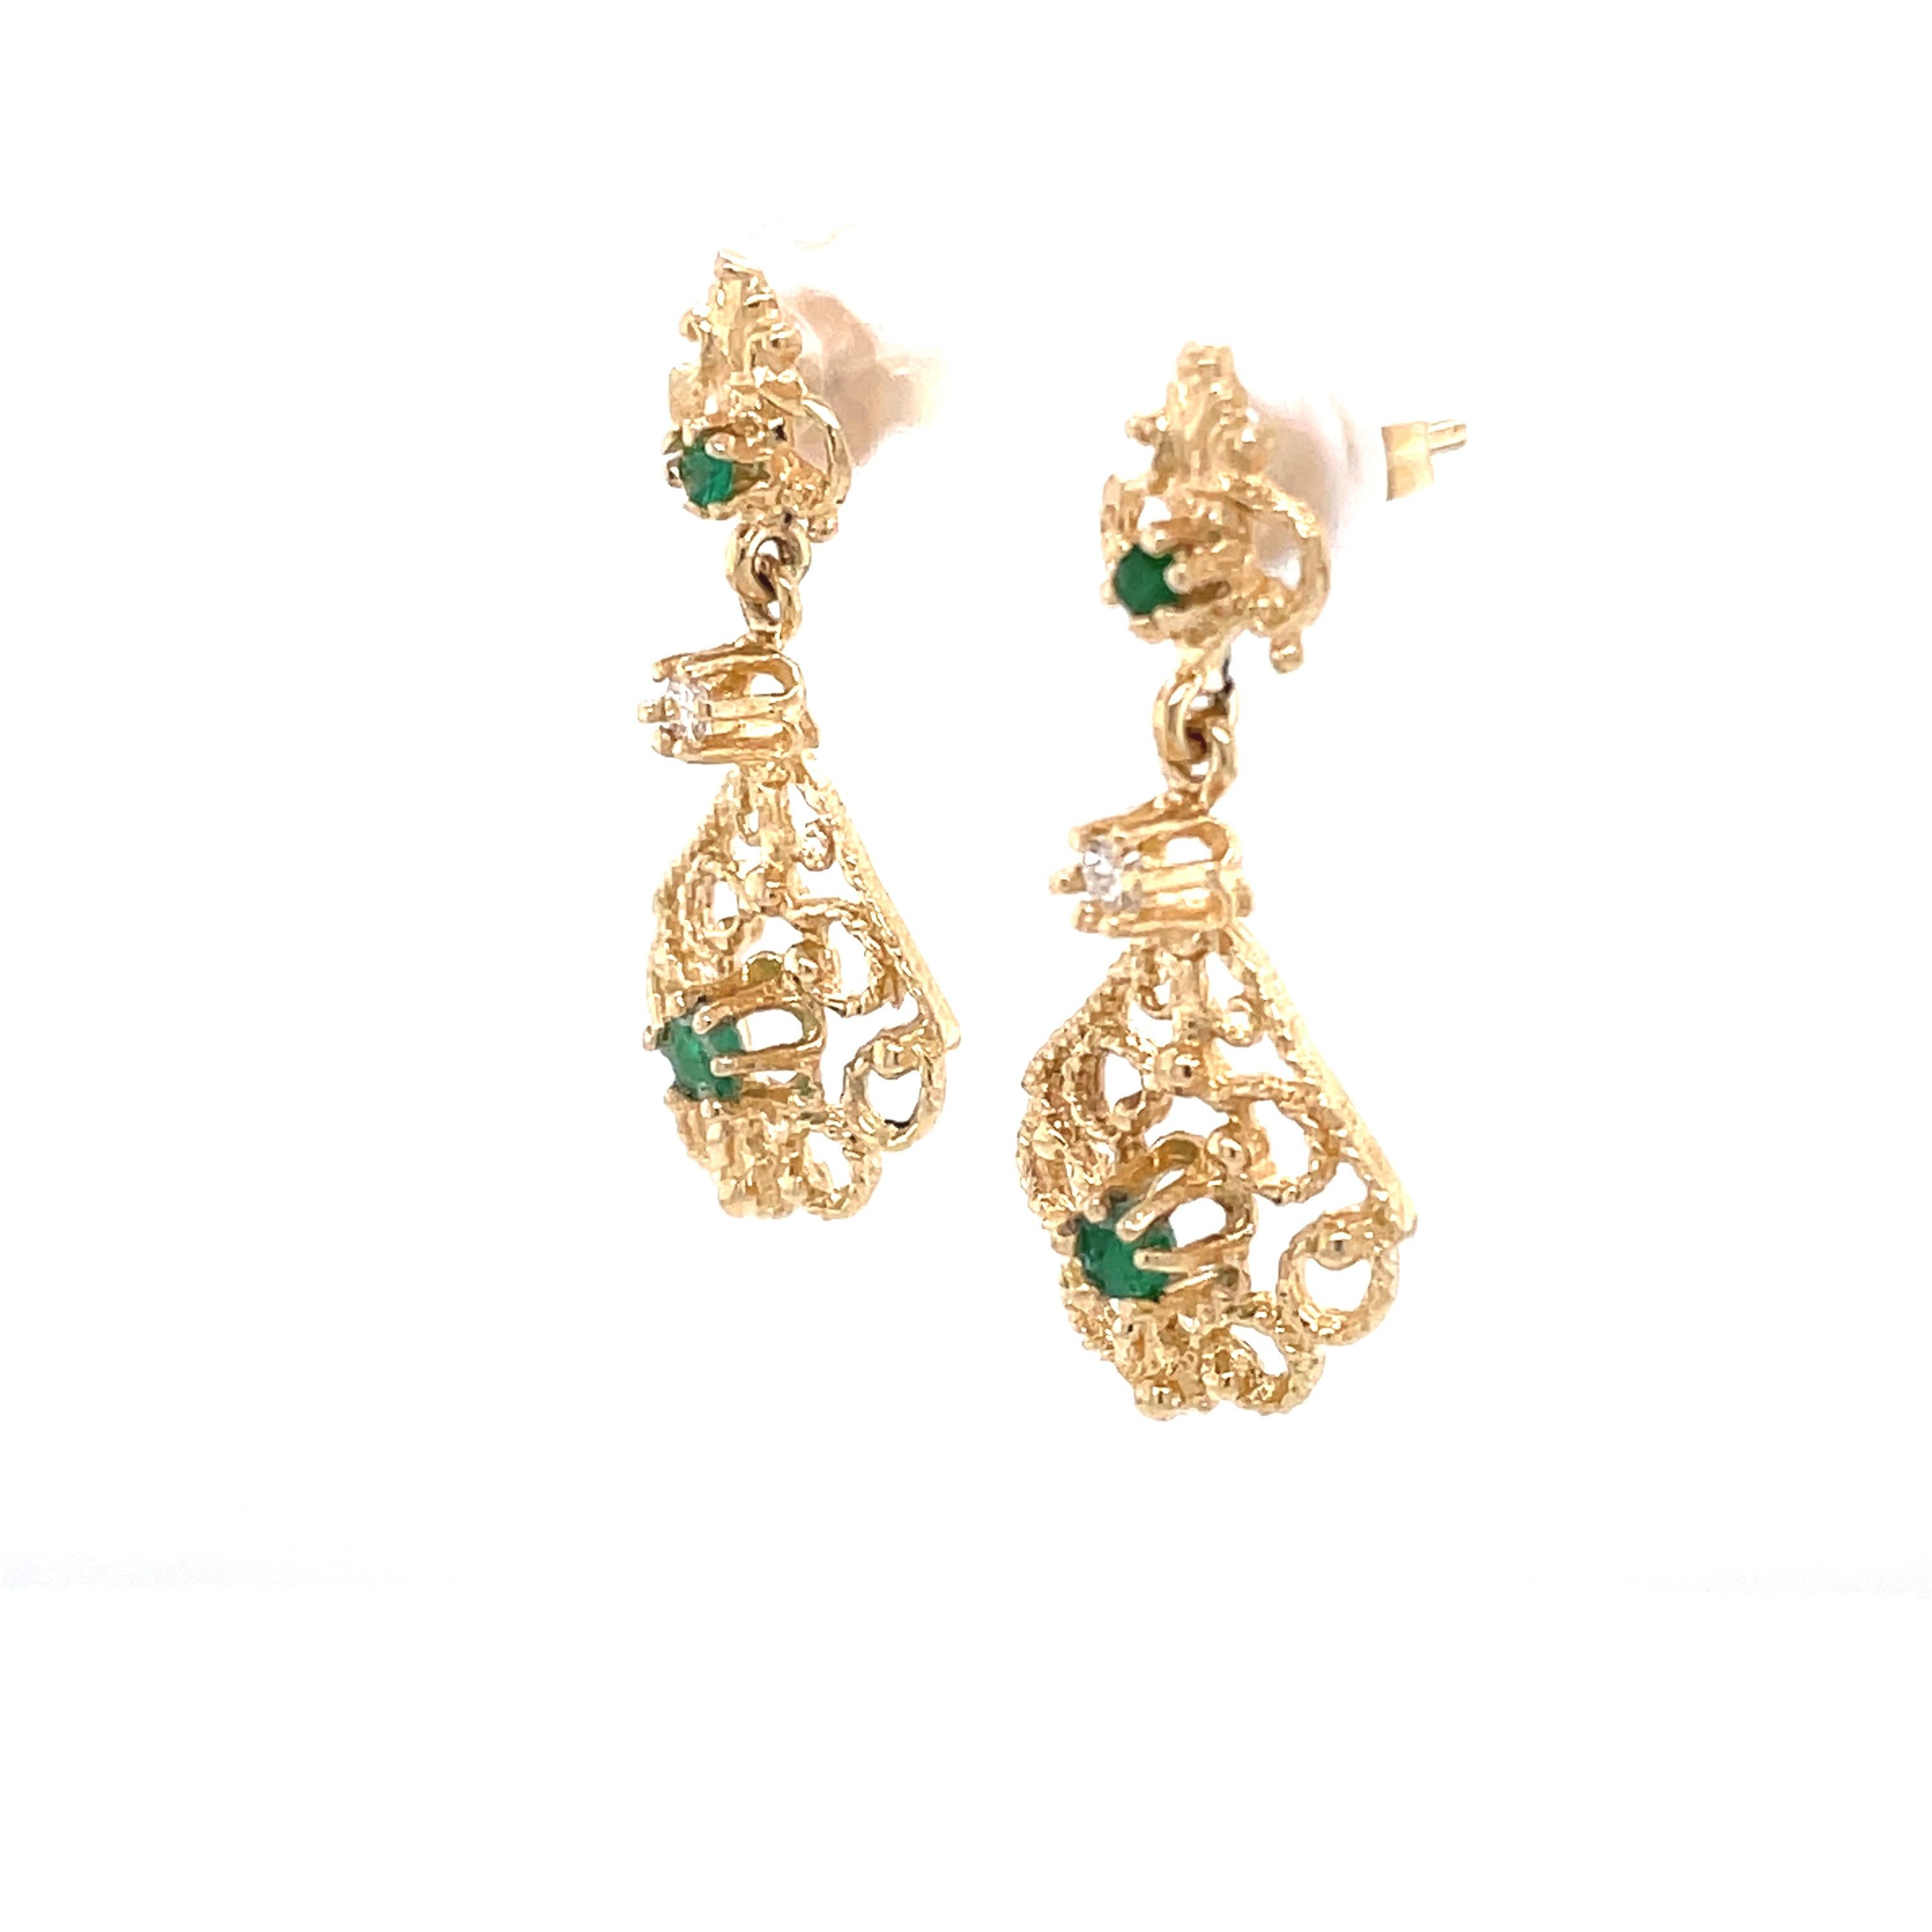 gold danglers earrings